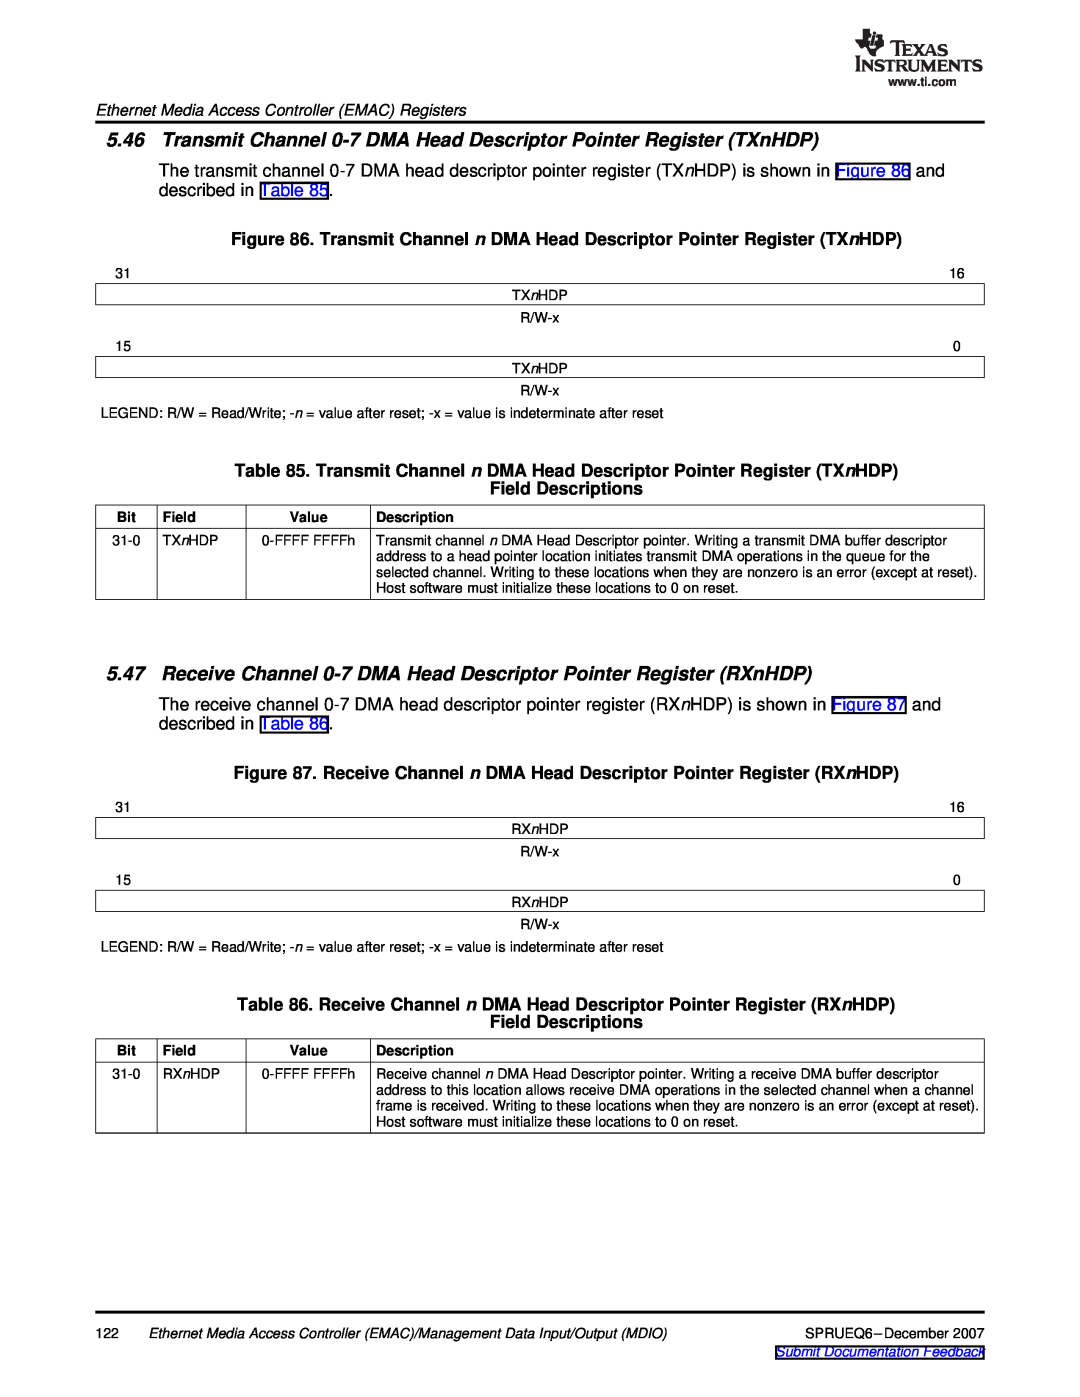 Texas Instruments TMS320DM646x manual Transmit Channel 0-7 DMA Head Descriptor Pointer Register TXnHDP, Field Descriptions 